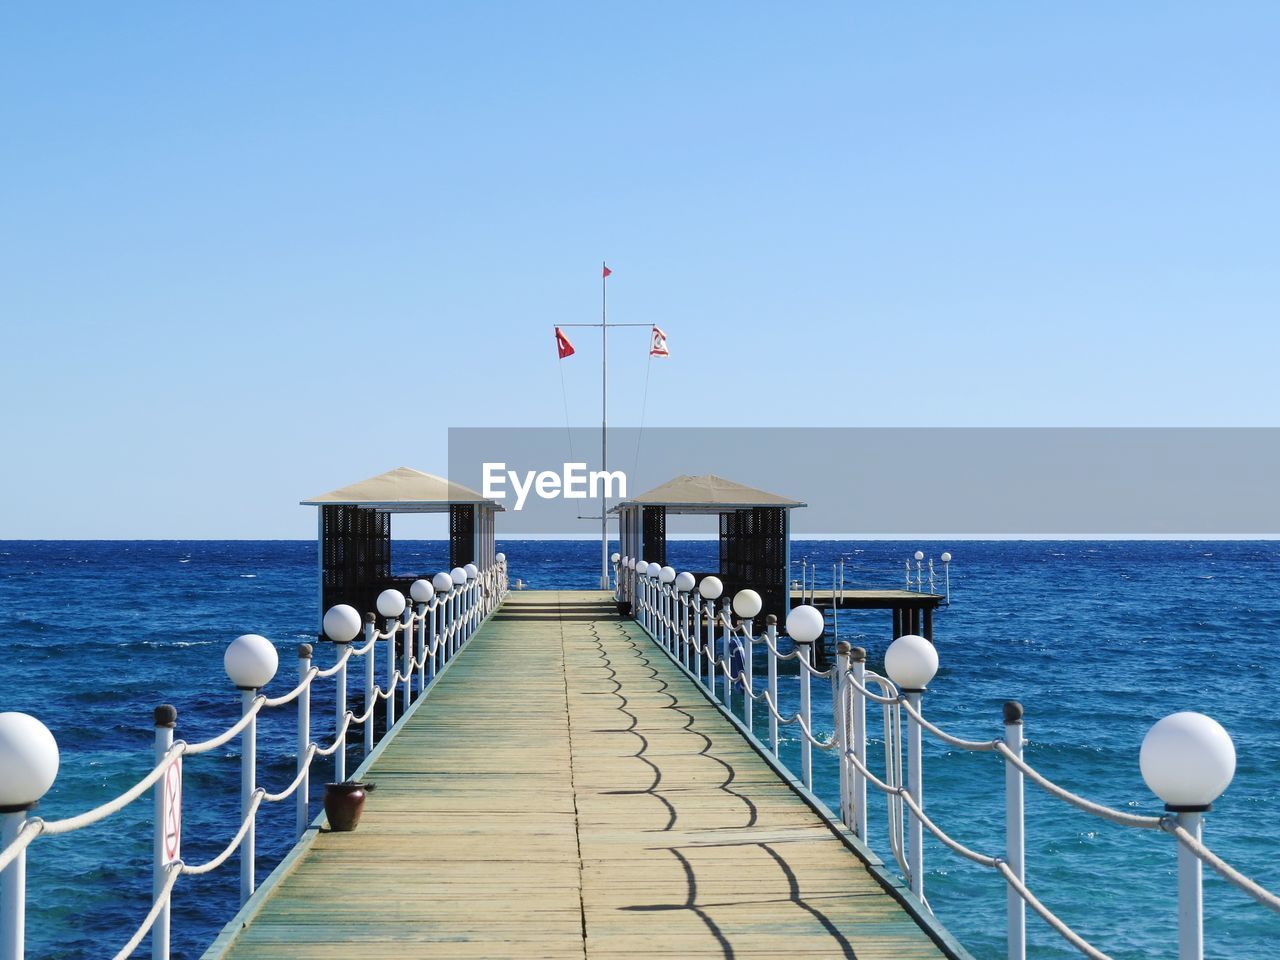 Pier cyprus blue sea